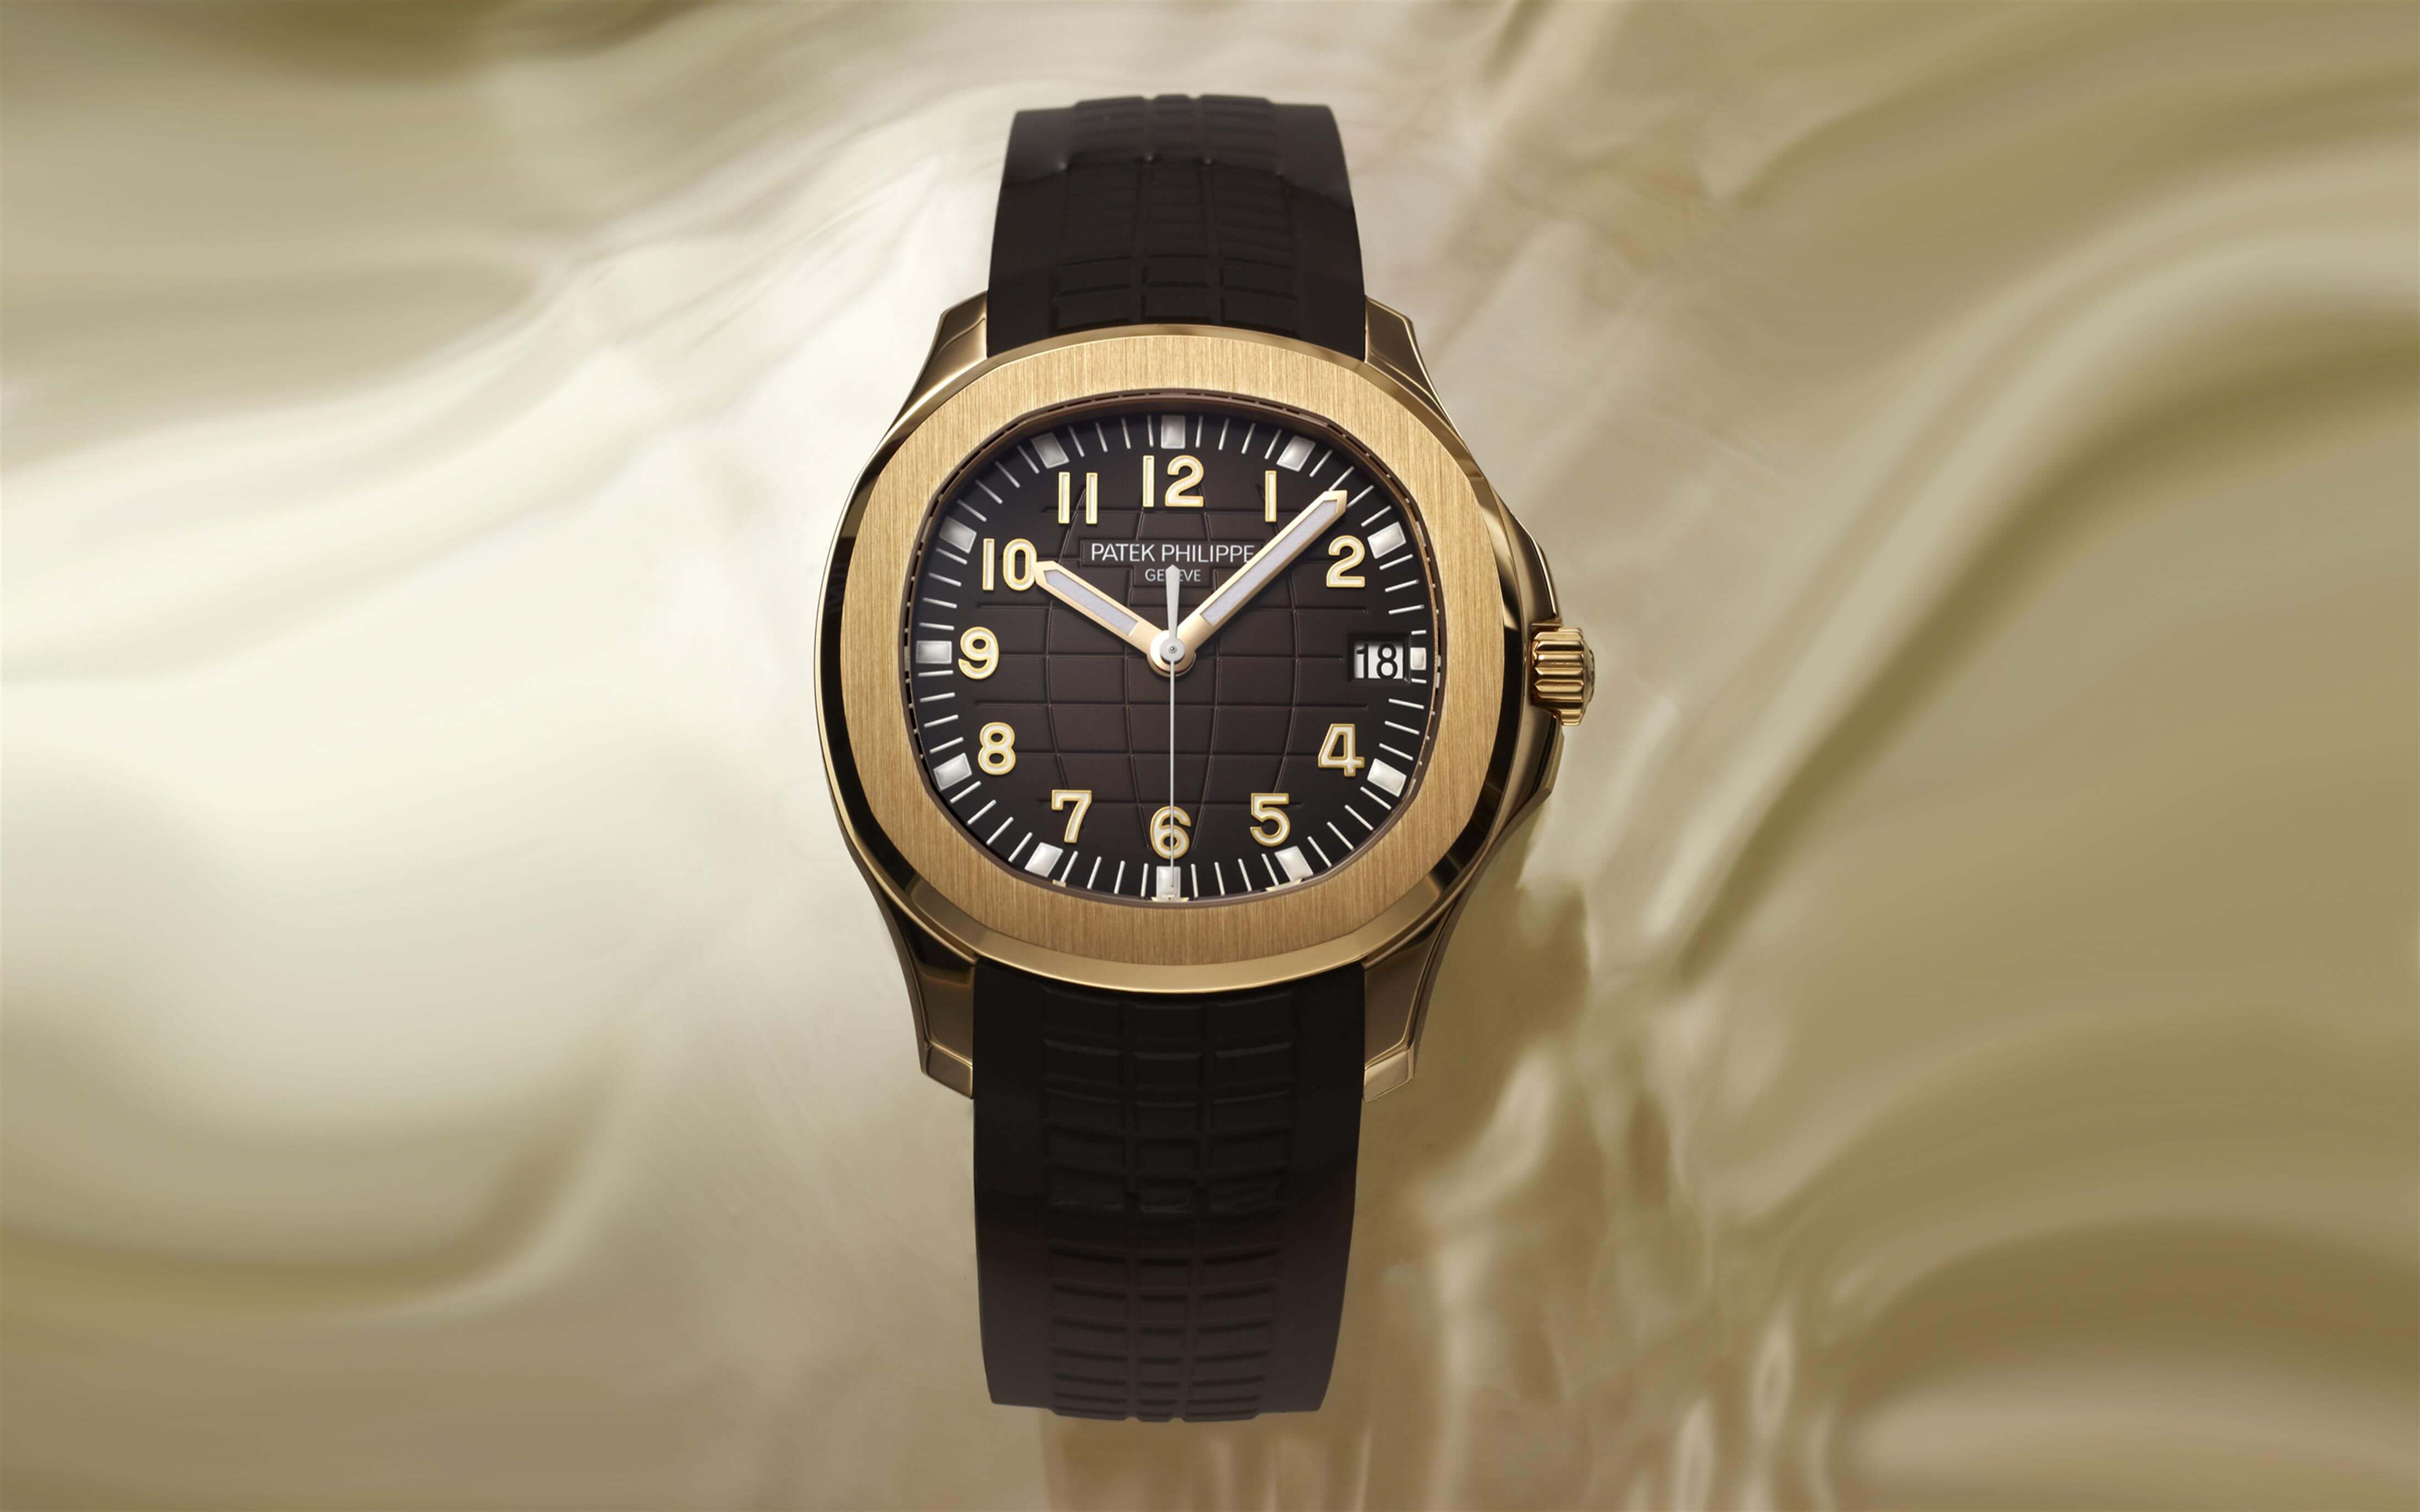 What Makes This Patek Philippe x Tiffany Watch Worth $6.5M?